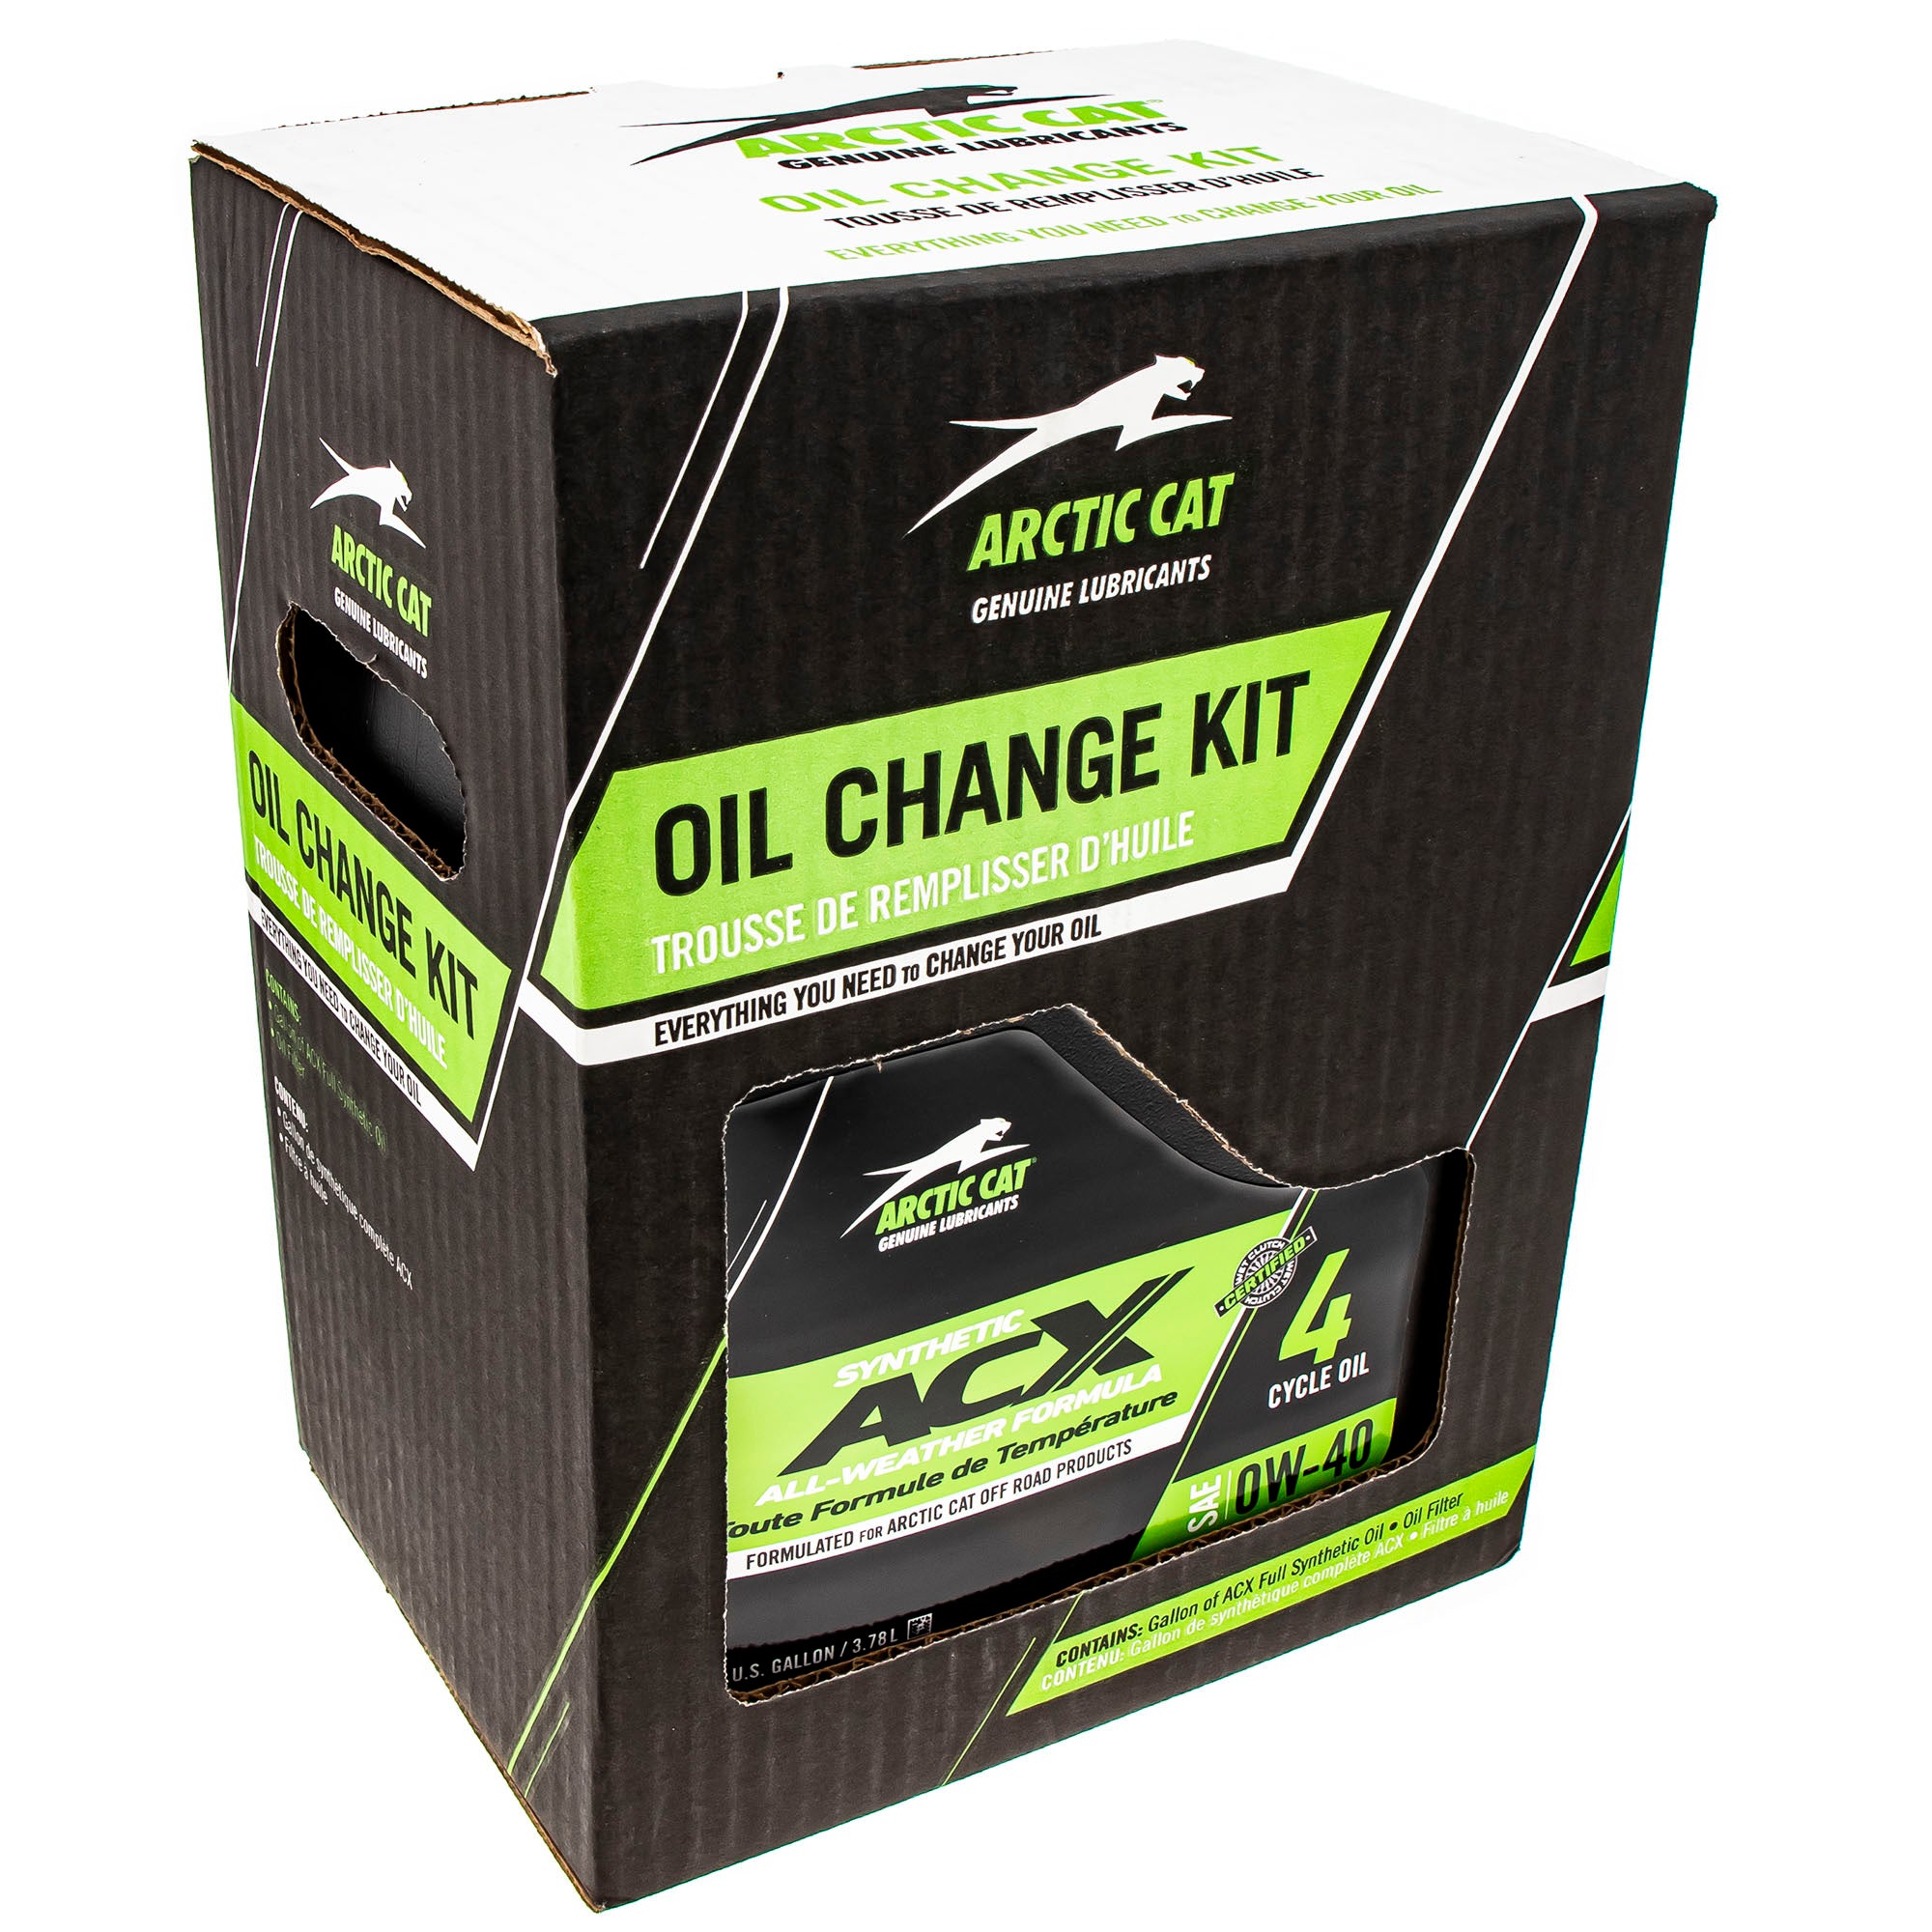 Arctic Cat 2436-847 Oil Change Kit